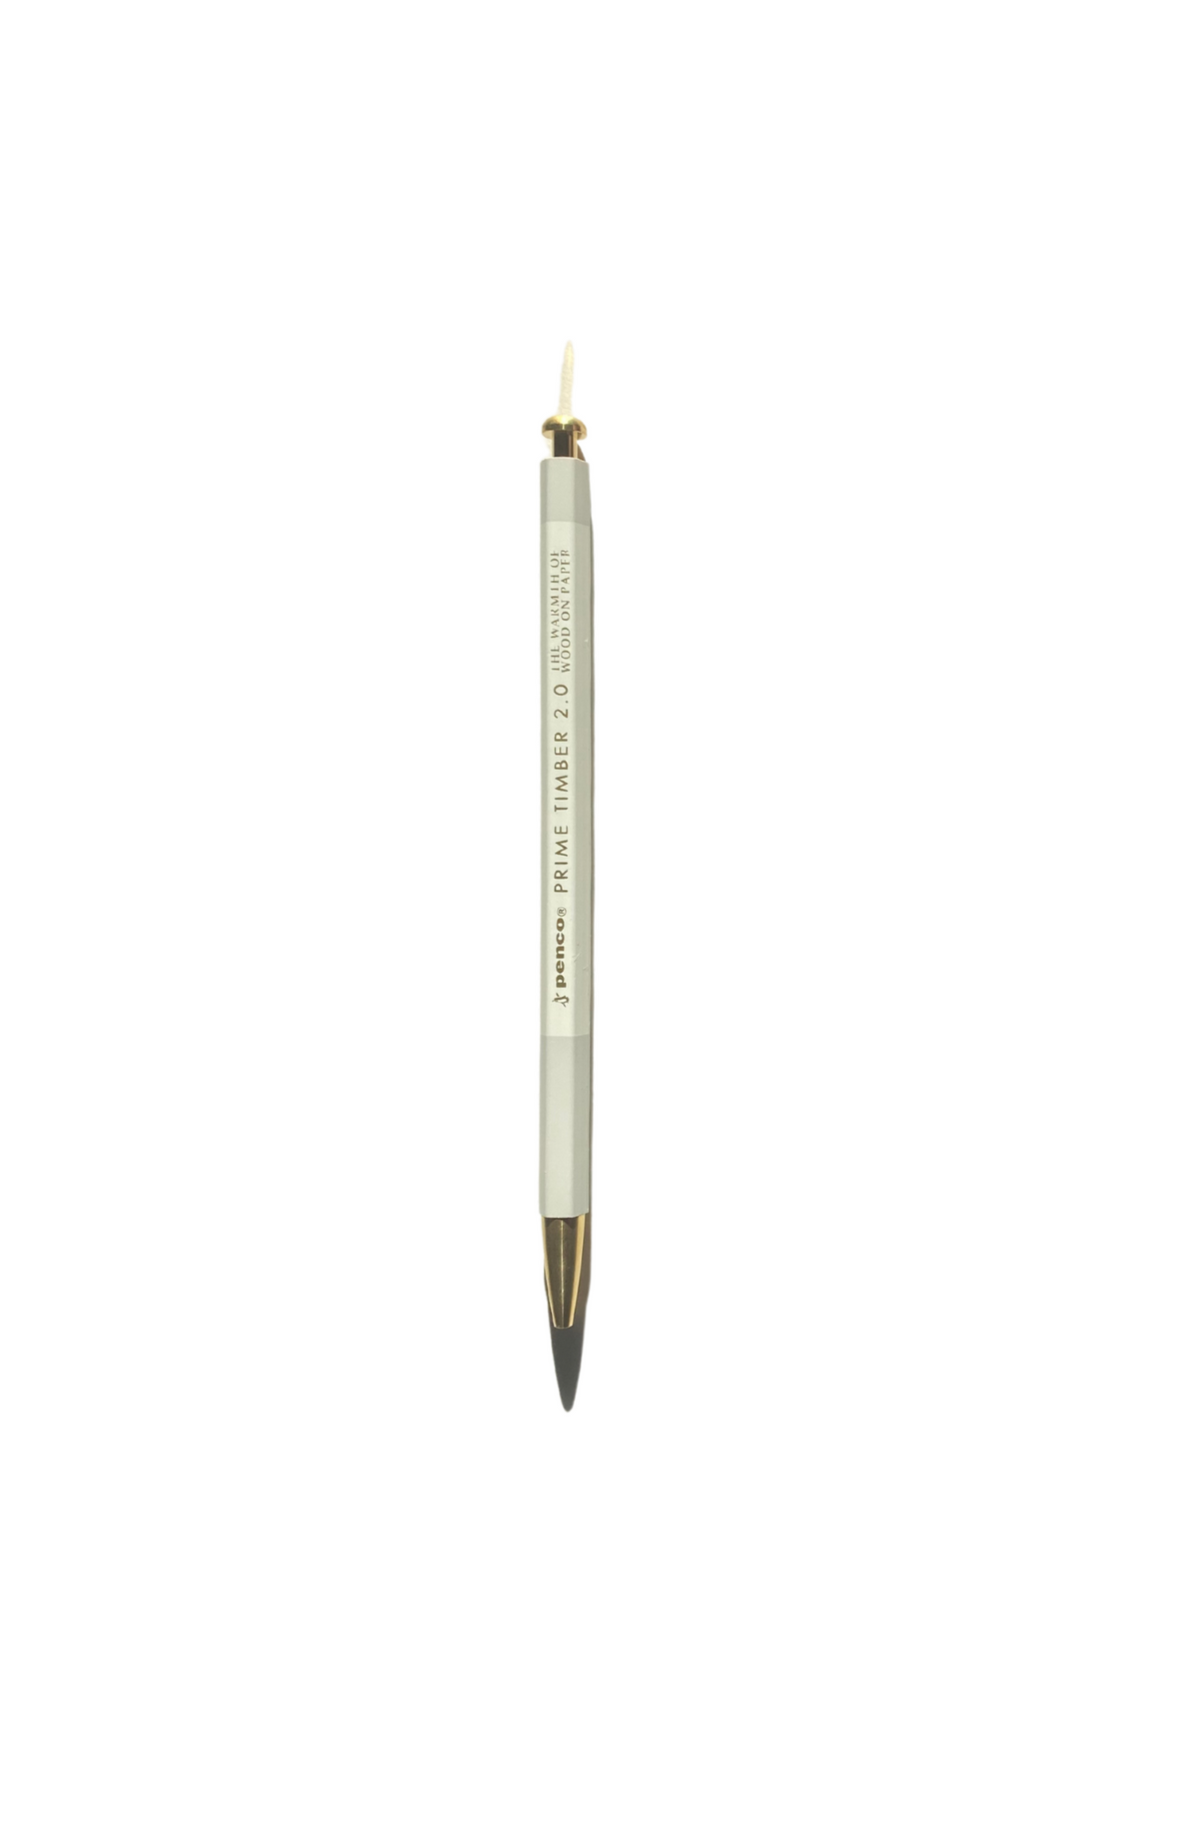 Prime Timber pencil and sharpener